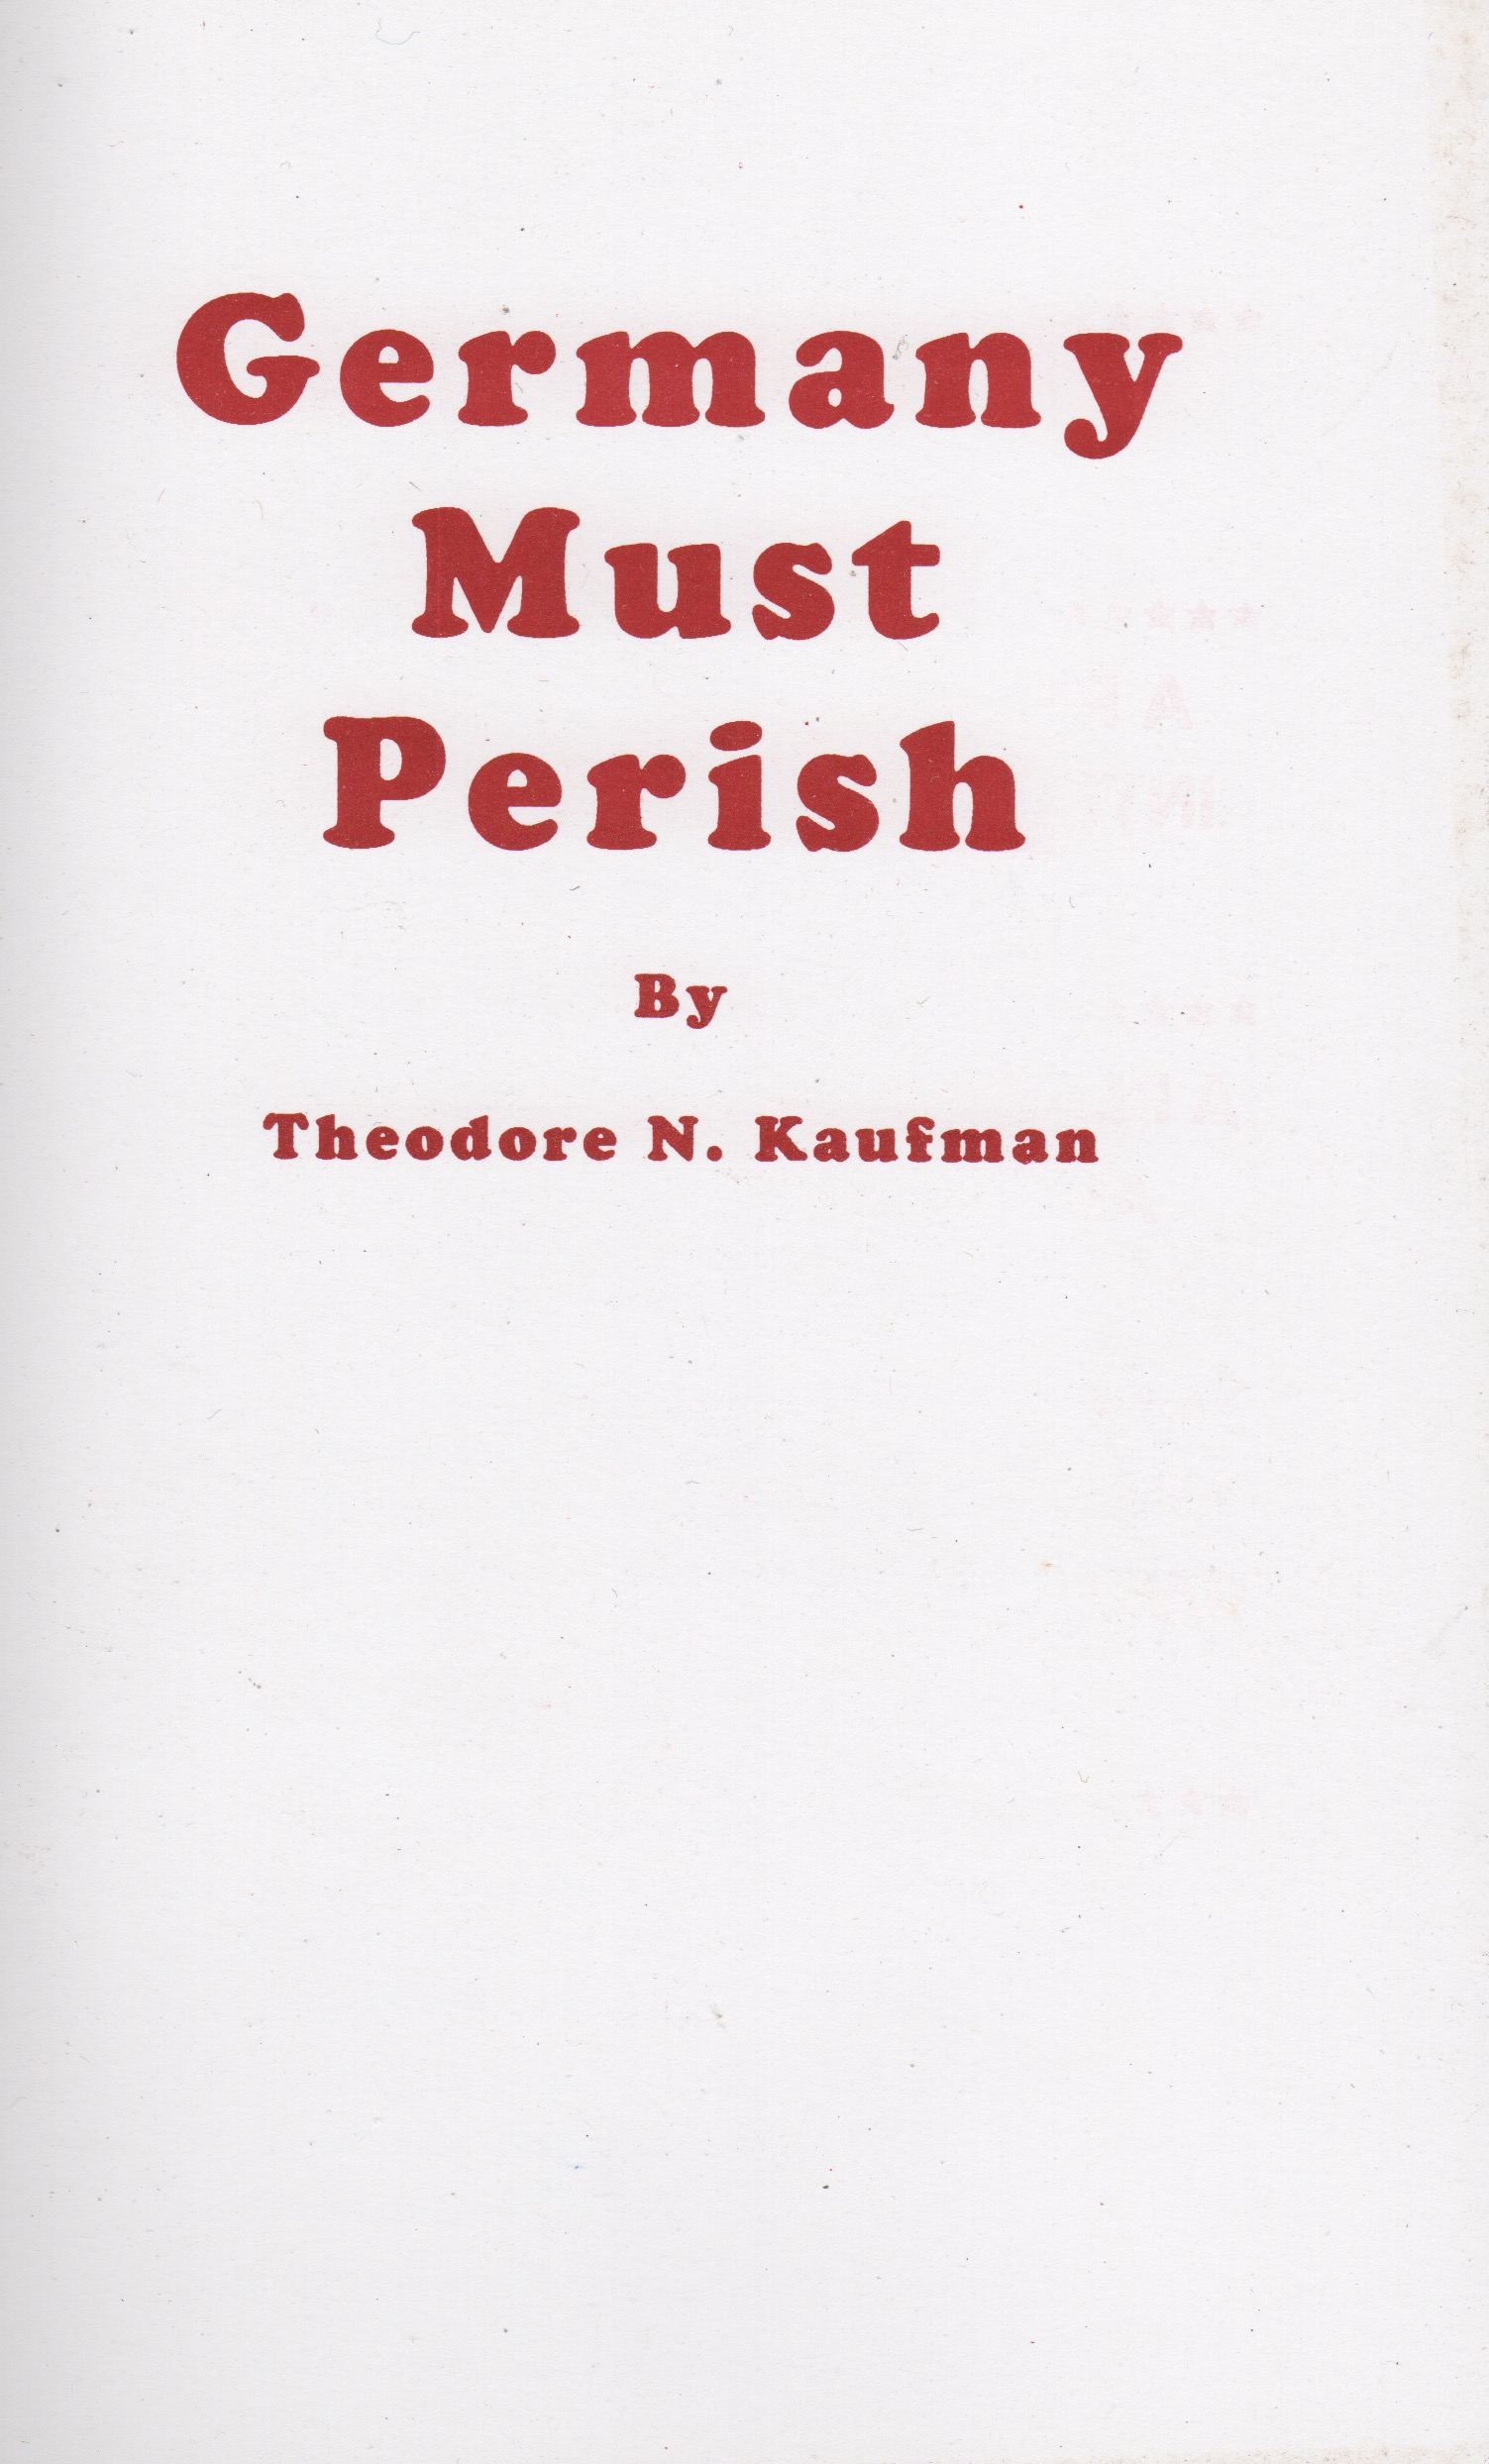 "Germany Must Perish" by Theodore N. Kaufman